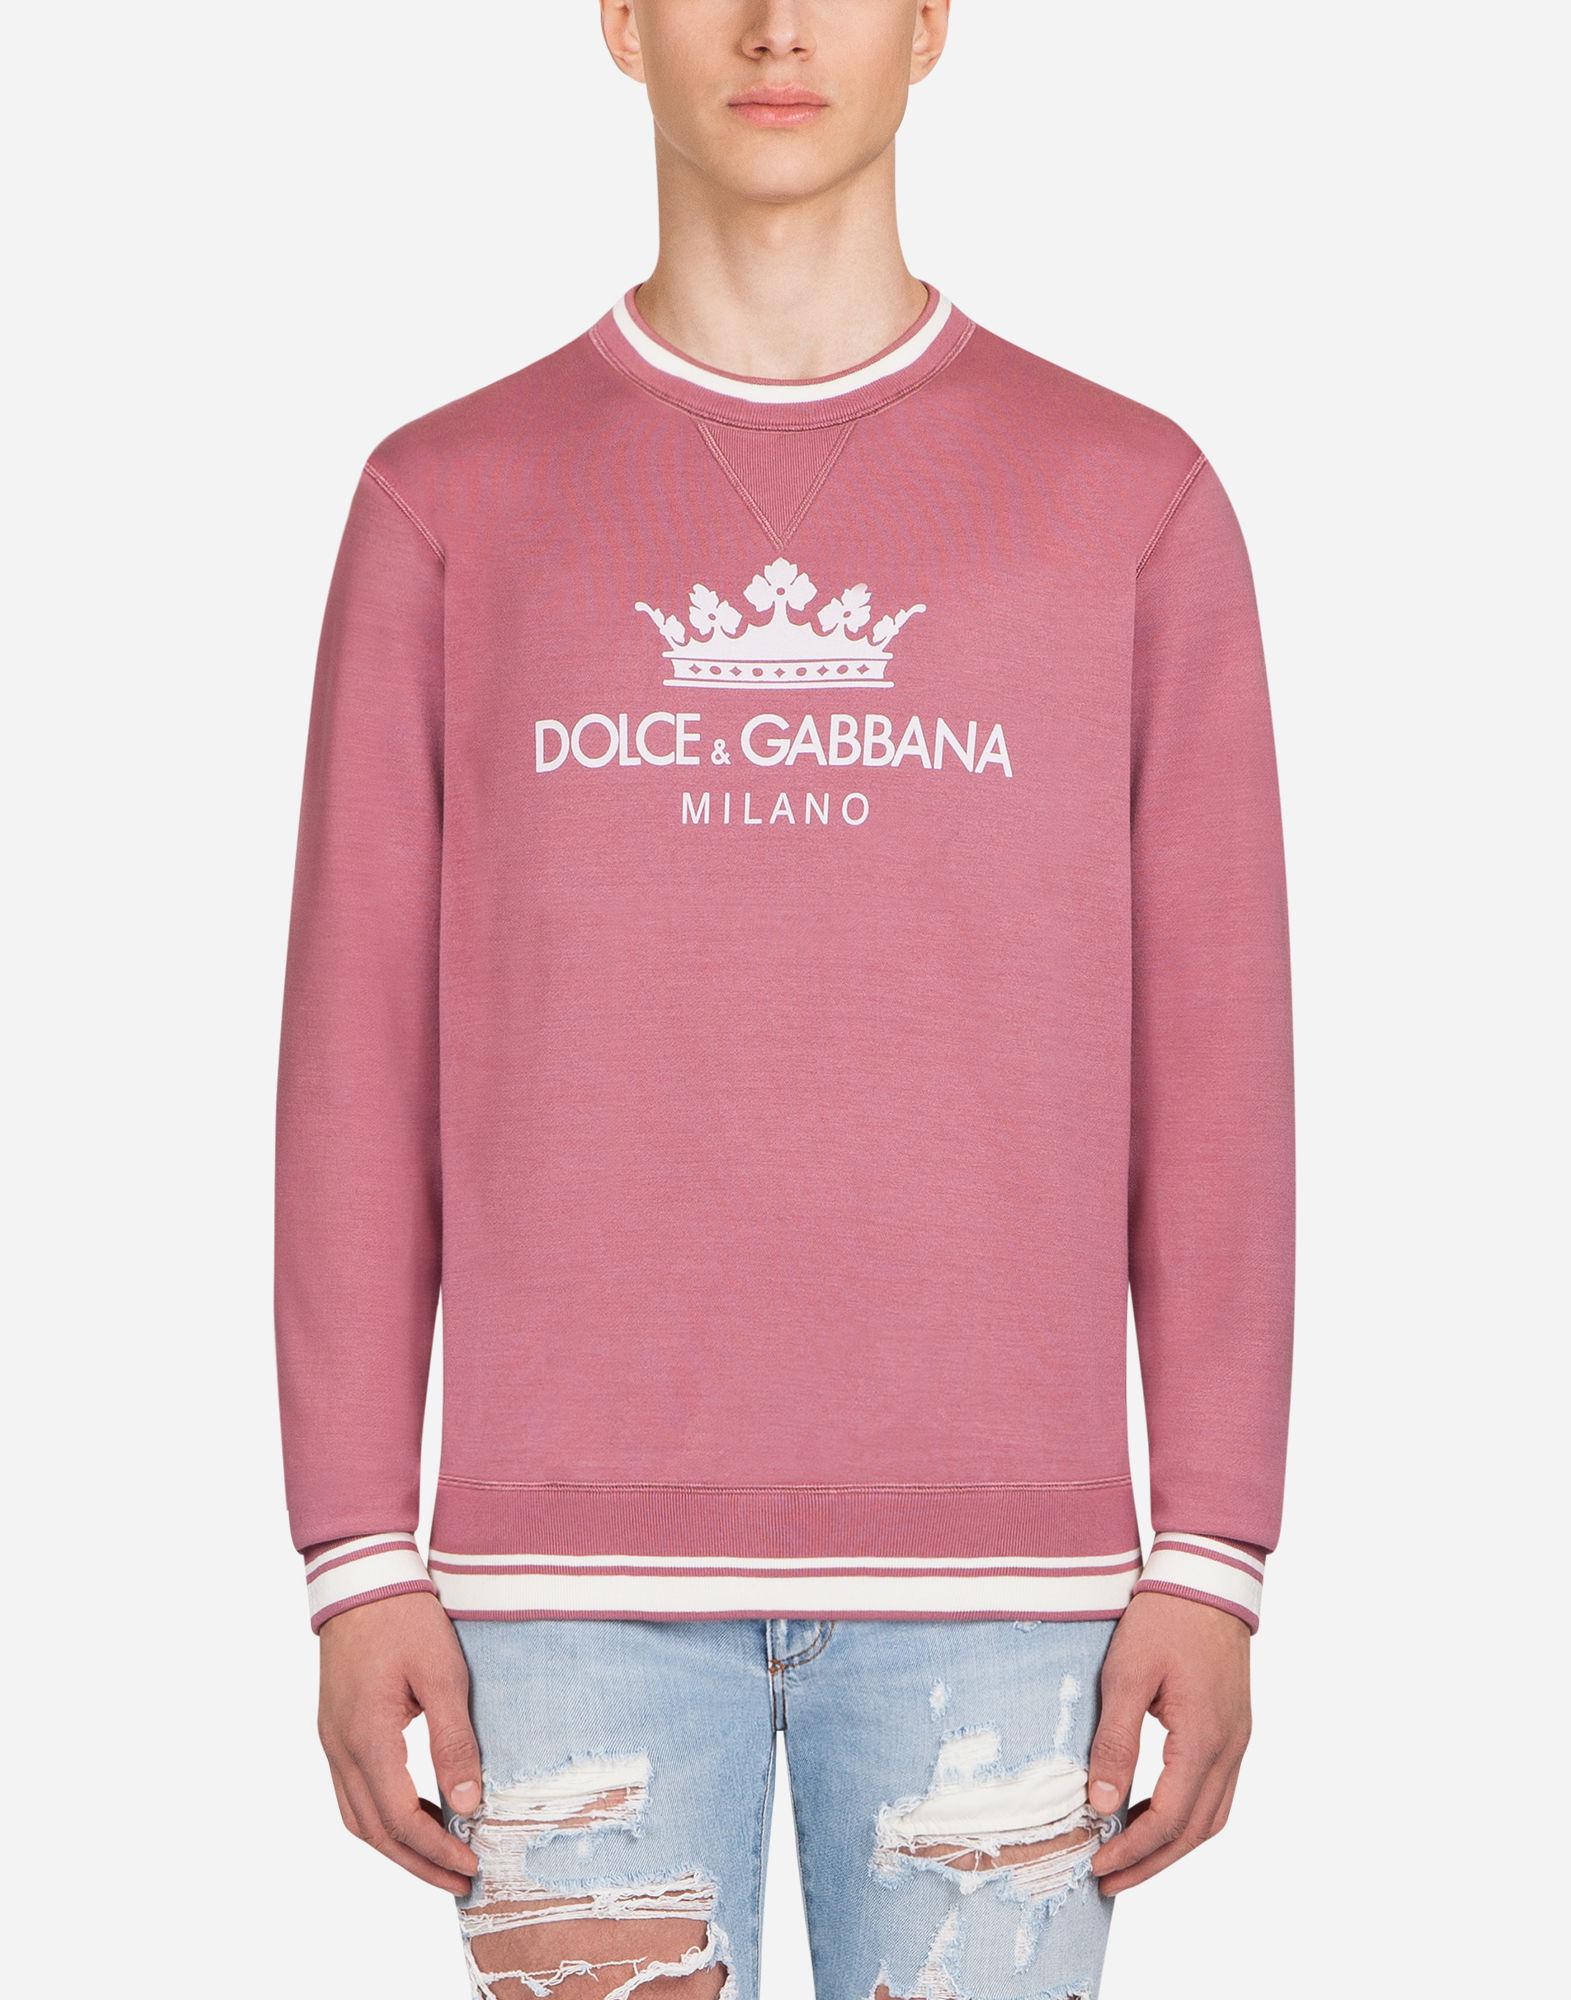 Dolce & Gabbana Sweatshirt In Printed Cotton in Pink for Men - Lyst